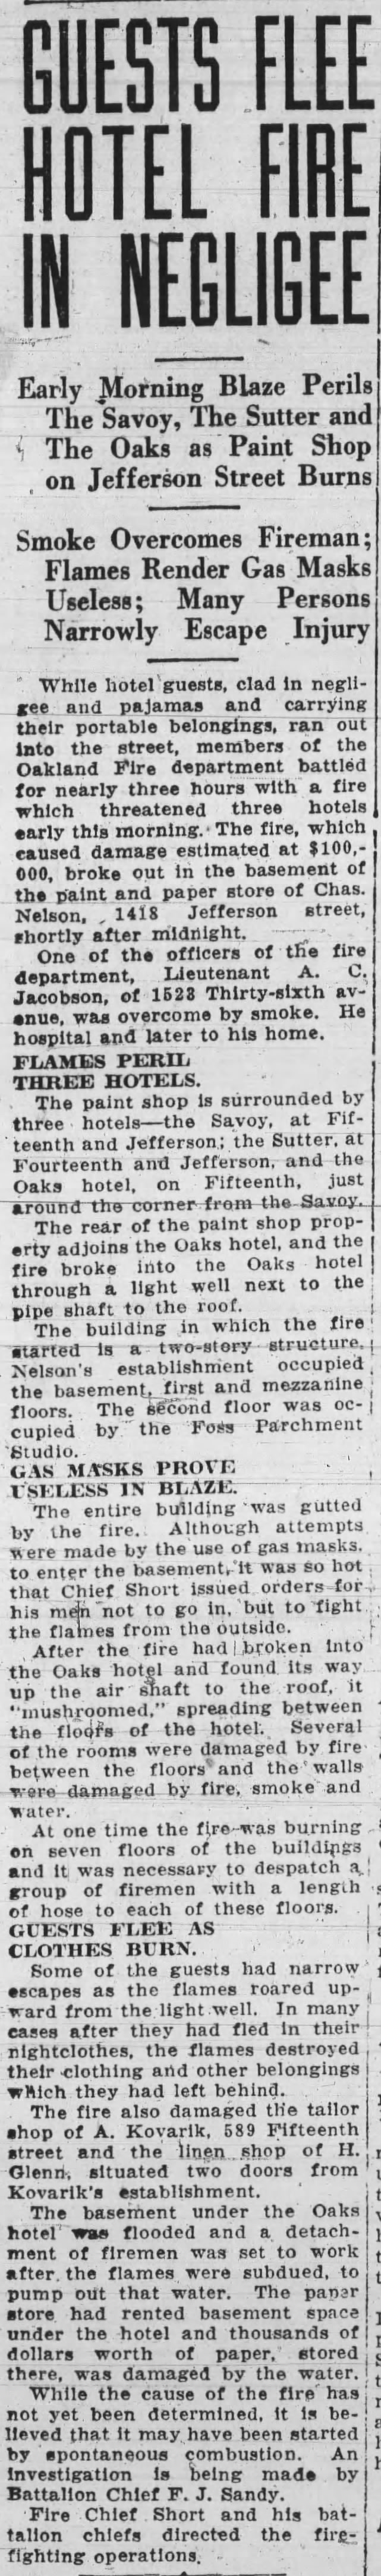 paint shop fire imperils Hotel Savoy, The Oaks Hotel, Sutter Hotel